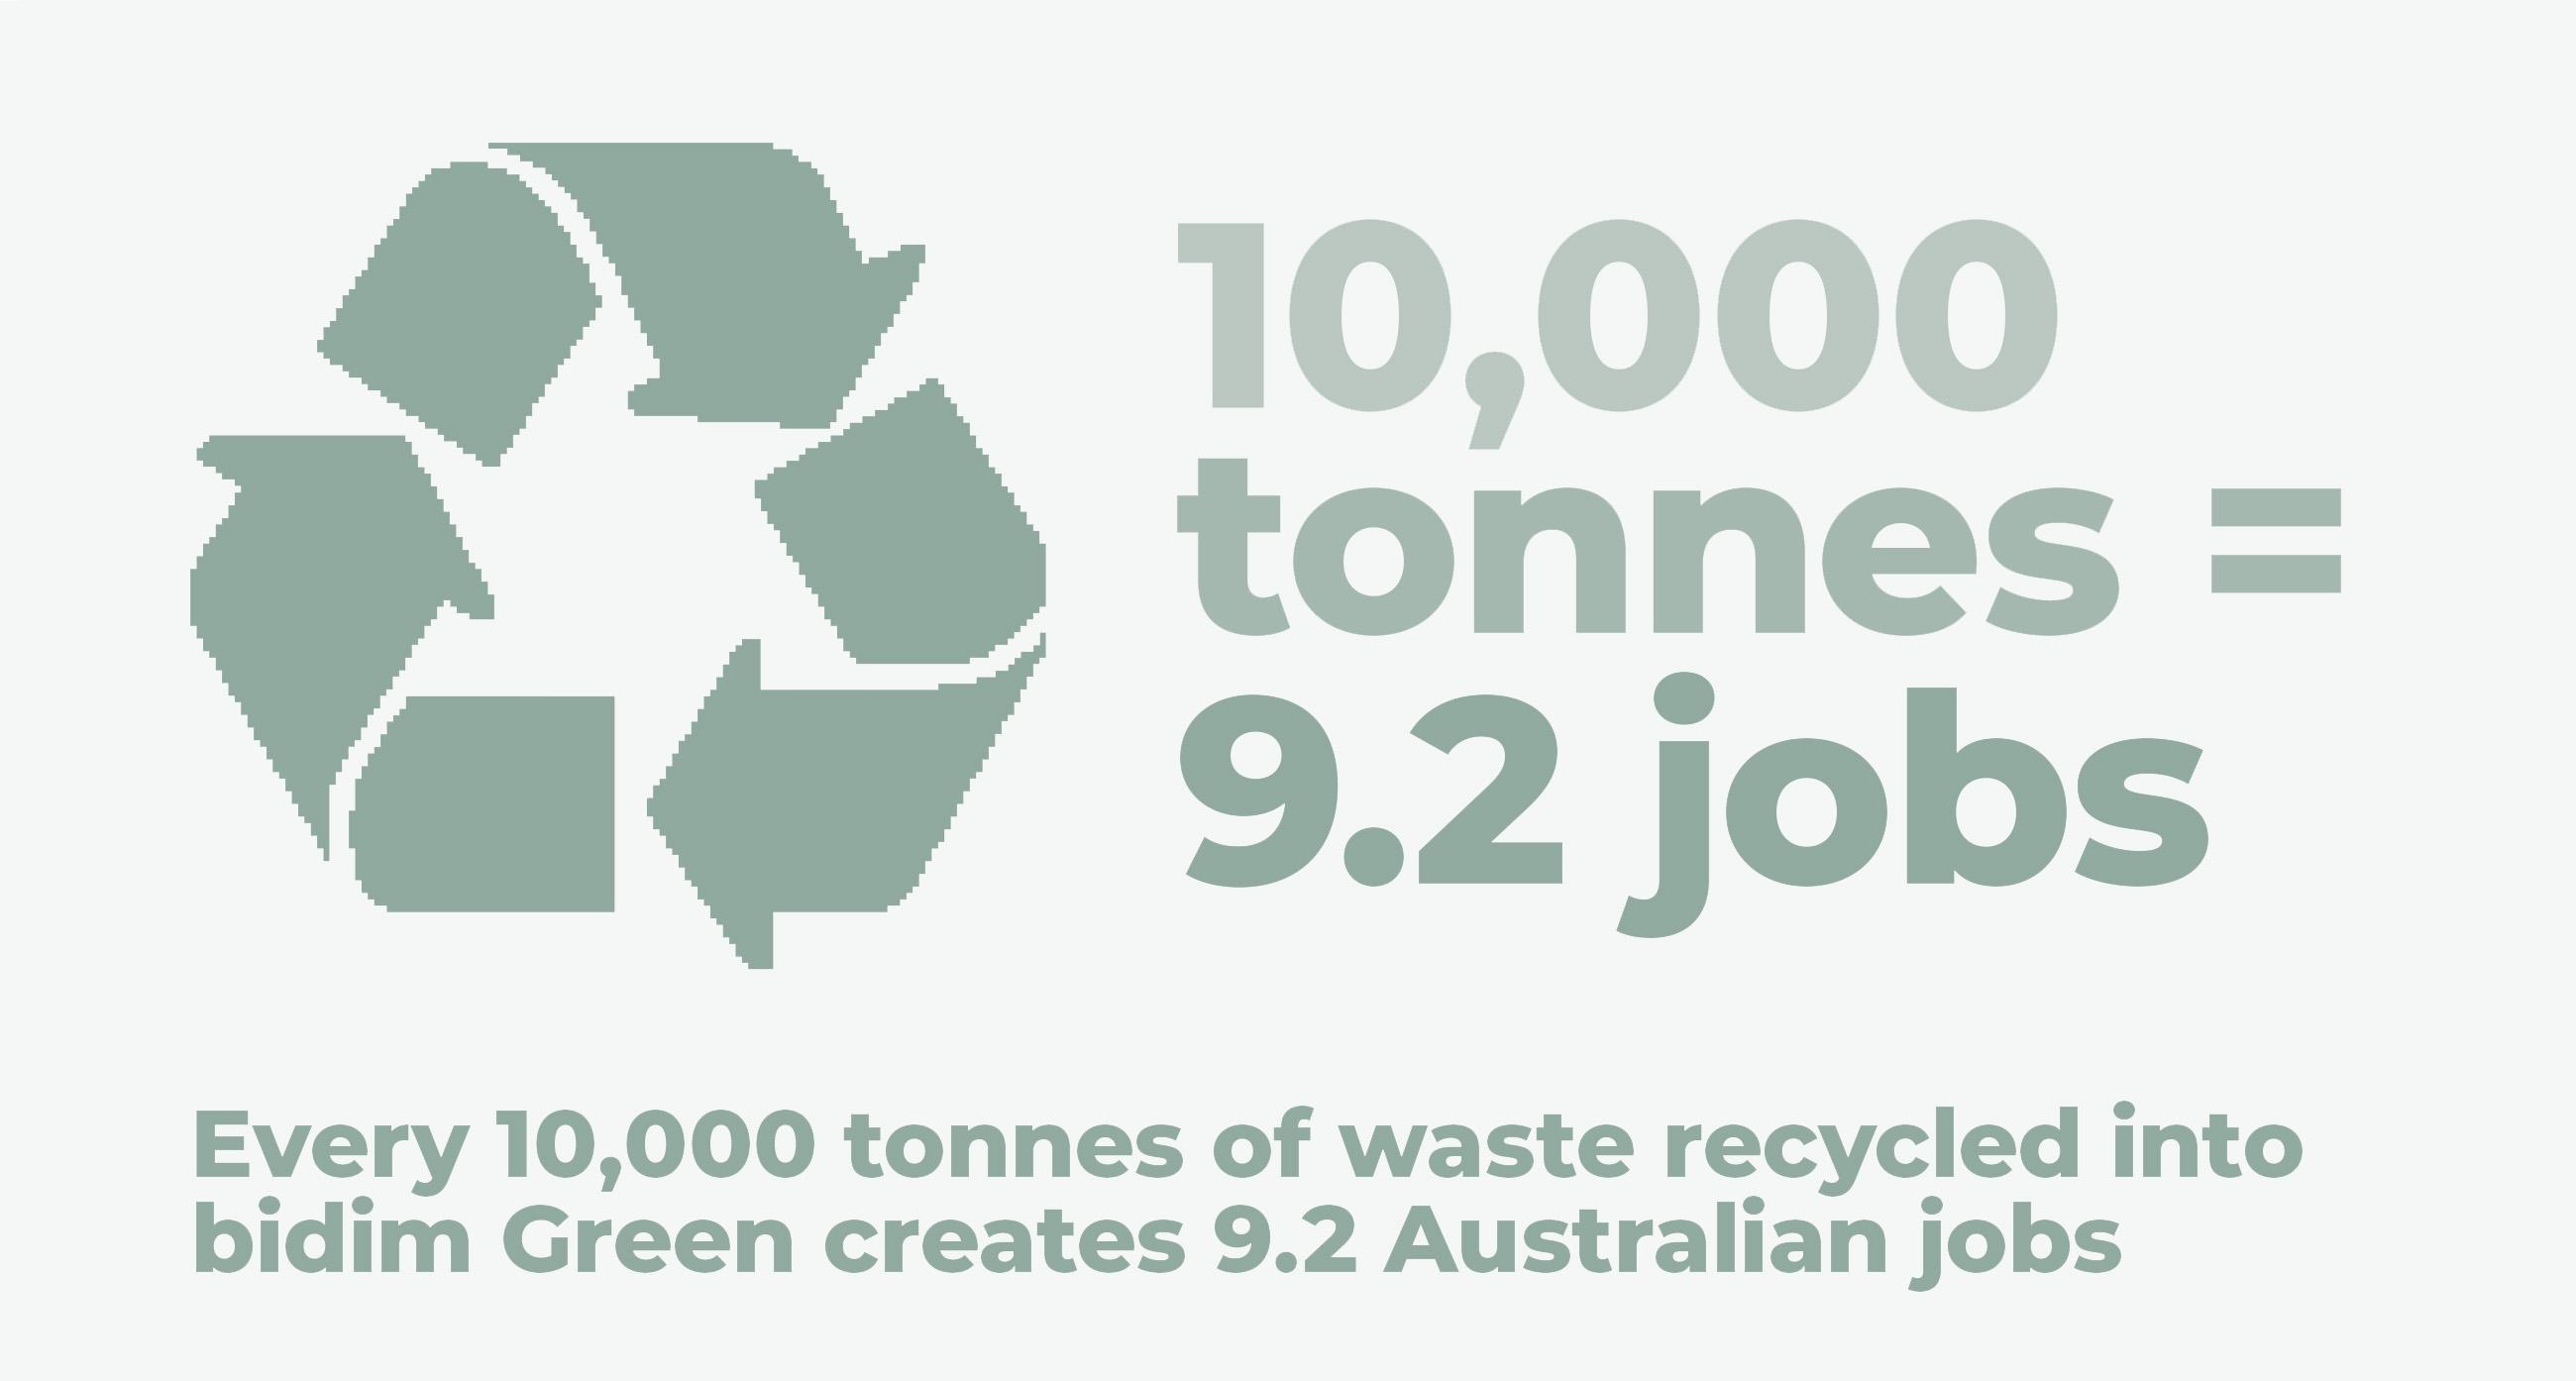 10,000 tonnes creating 9.2 jobs for Australians.